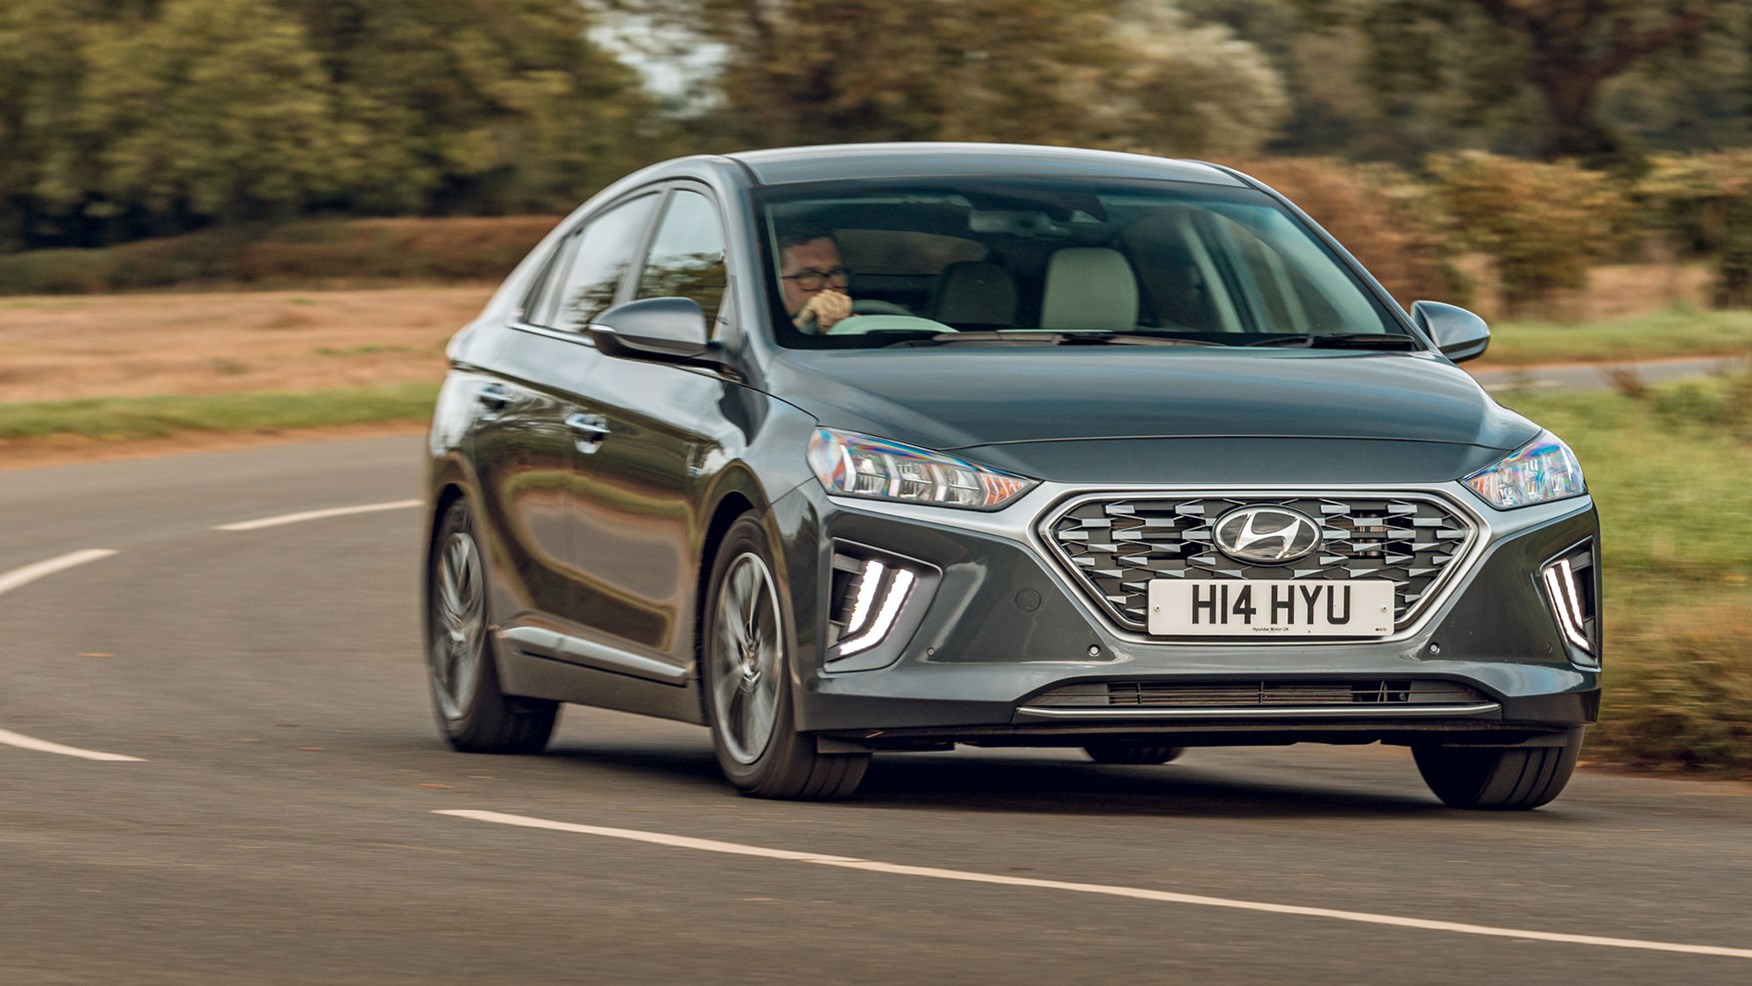 Hyundai's 2020 Ioniq Electric review: Good range, good price, and great fun